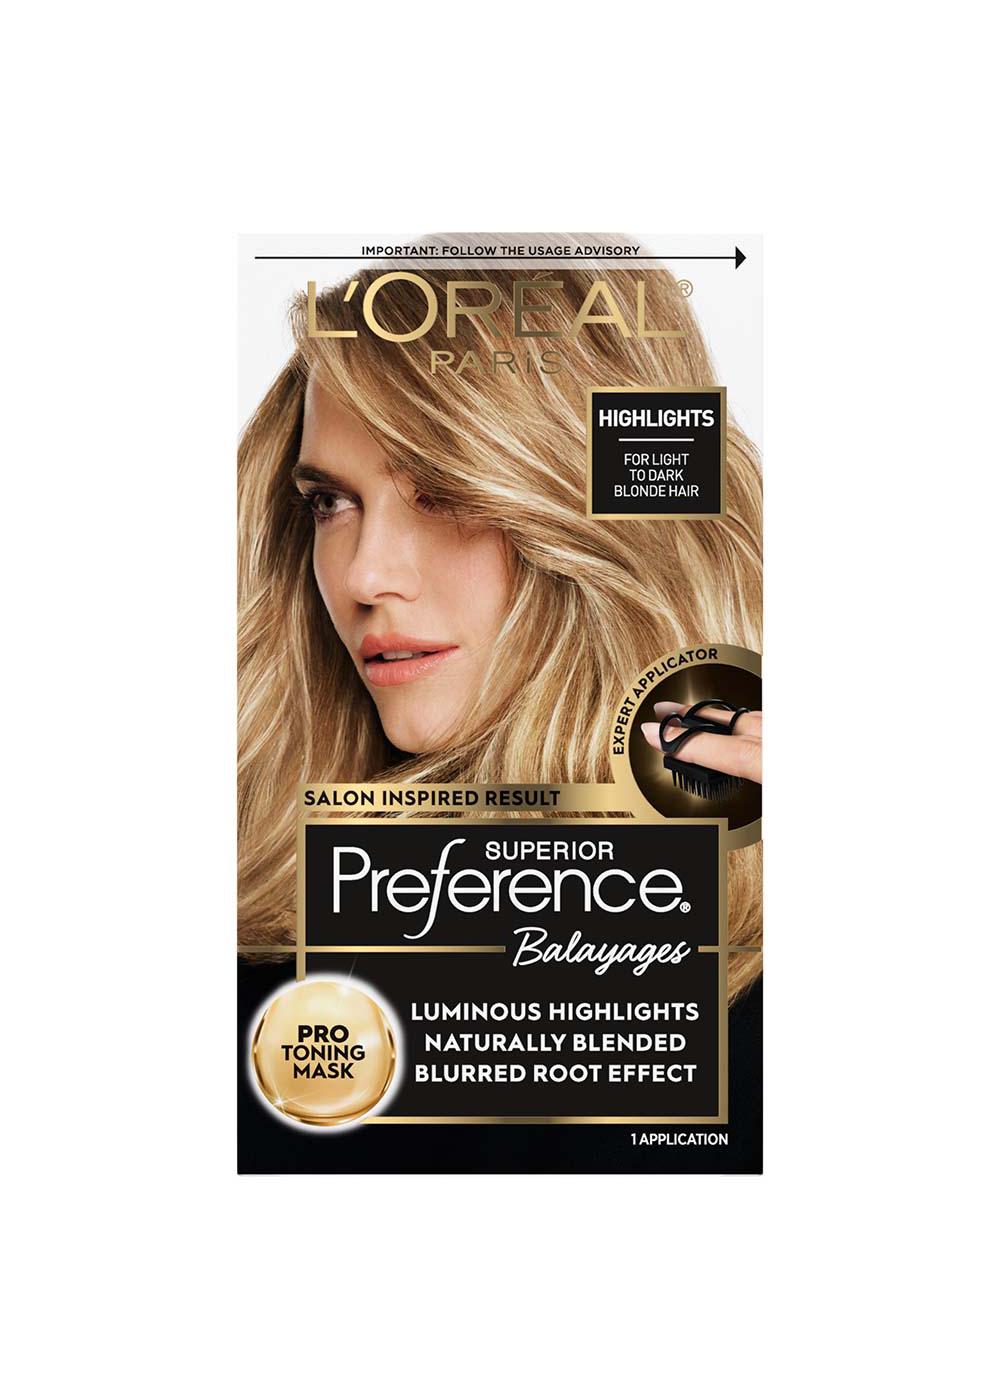 L'Oréal Paris Superior Preference Balayages Highlighting Kit - Light to Dark Blonde; image 1 of 4